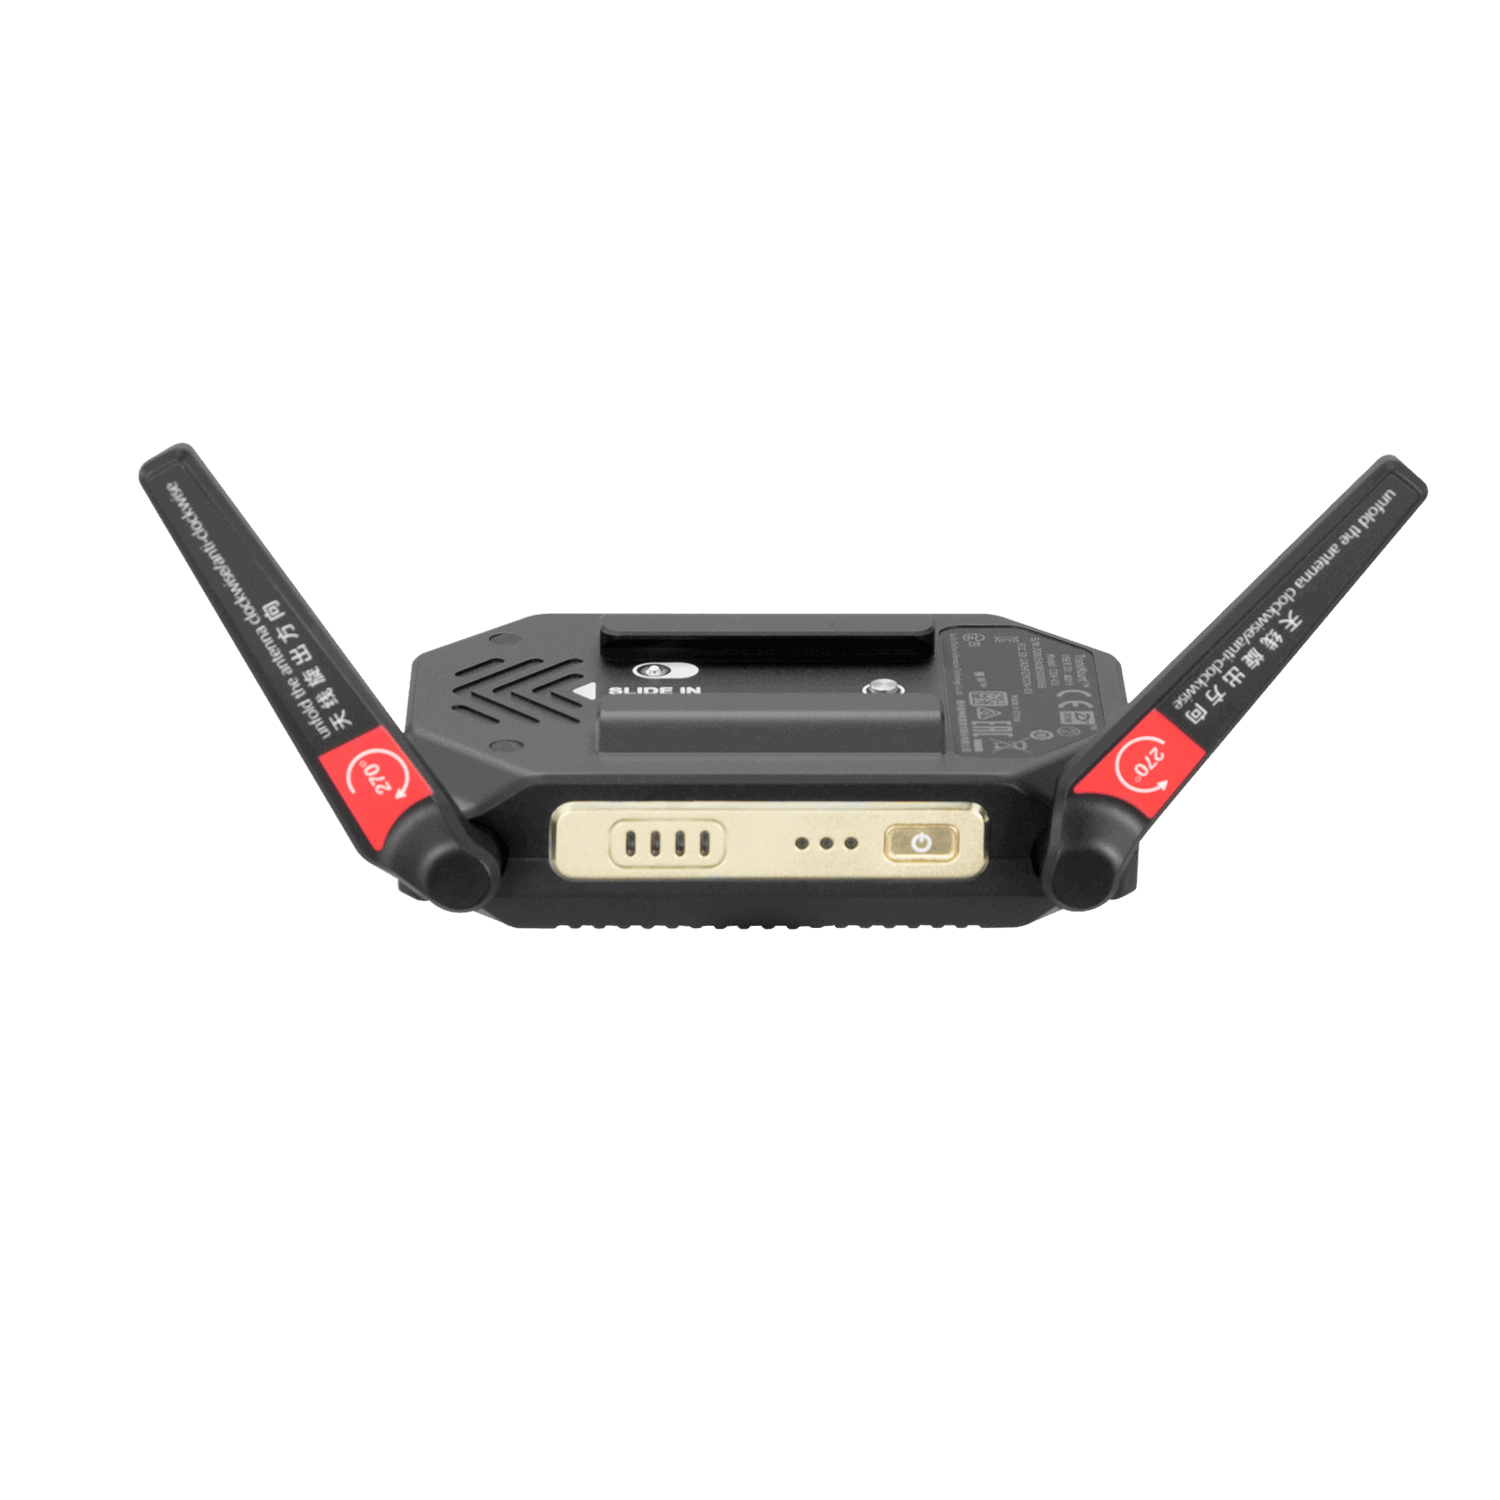 TransMount Video Transmission Transmitter | ZHIYUN Store